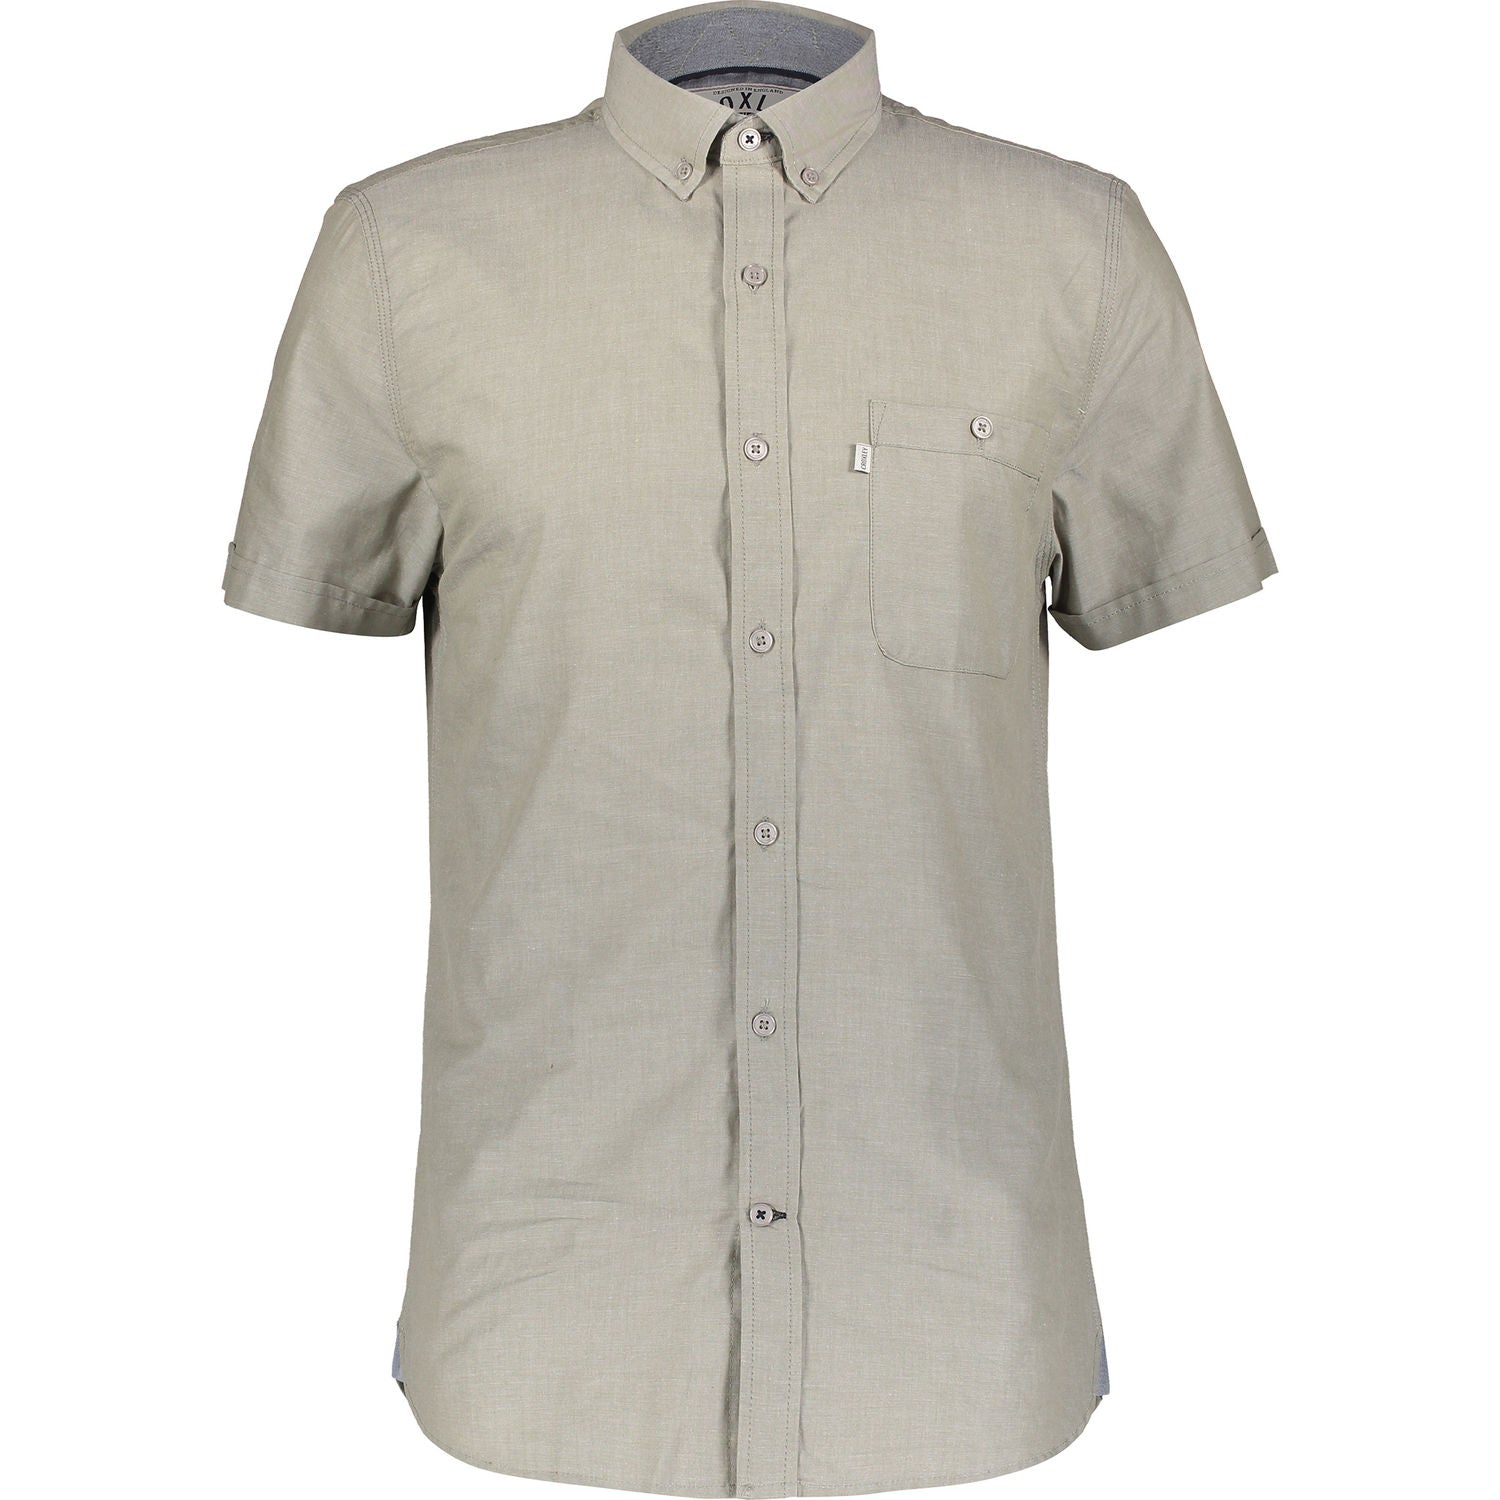 Croxley - Short Sleeve Faded Shirt - LabelledUp.com